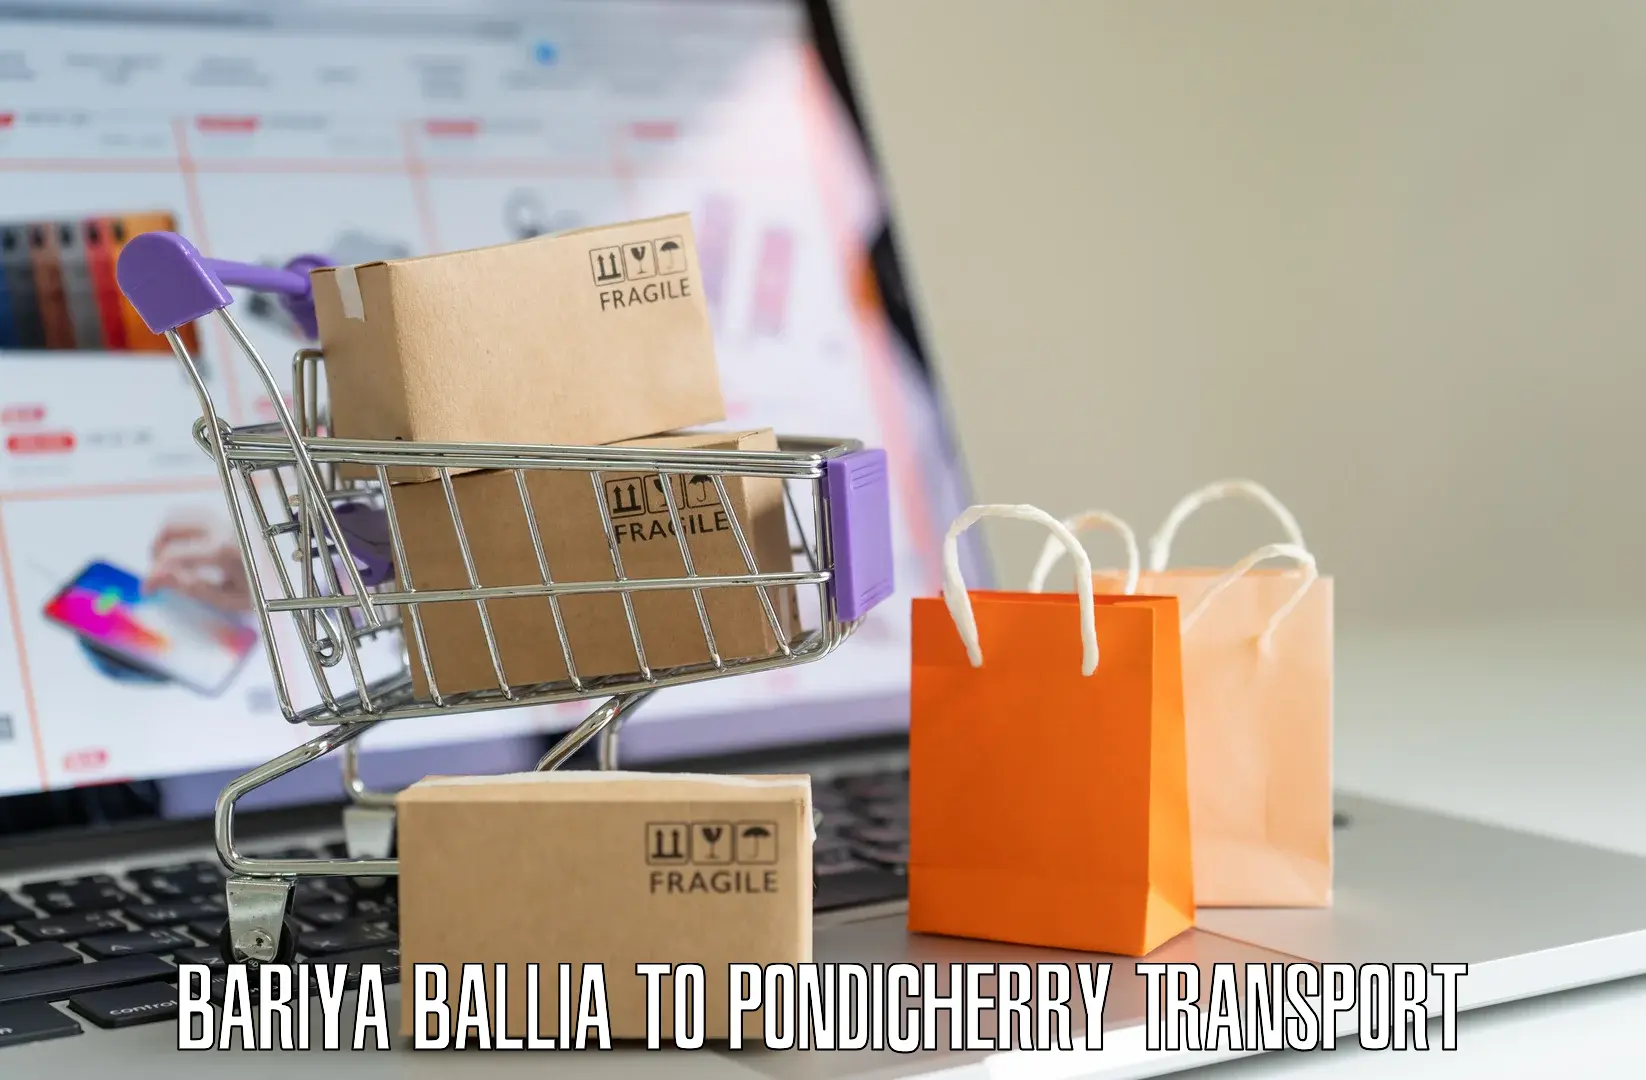 Container transport service Bariya Ballia to Pondicherry